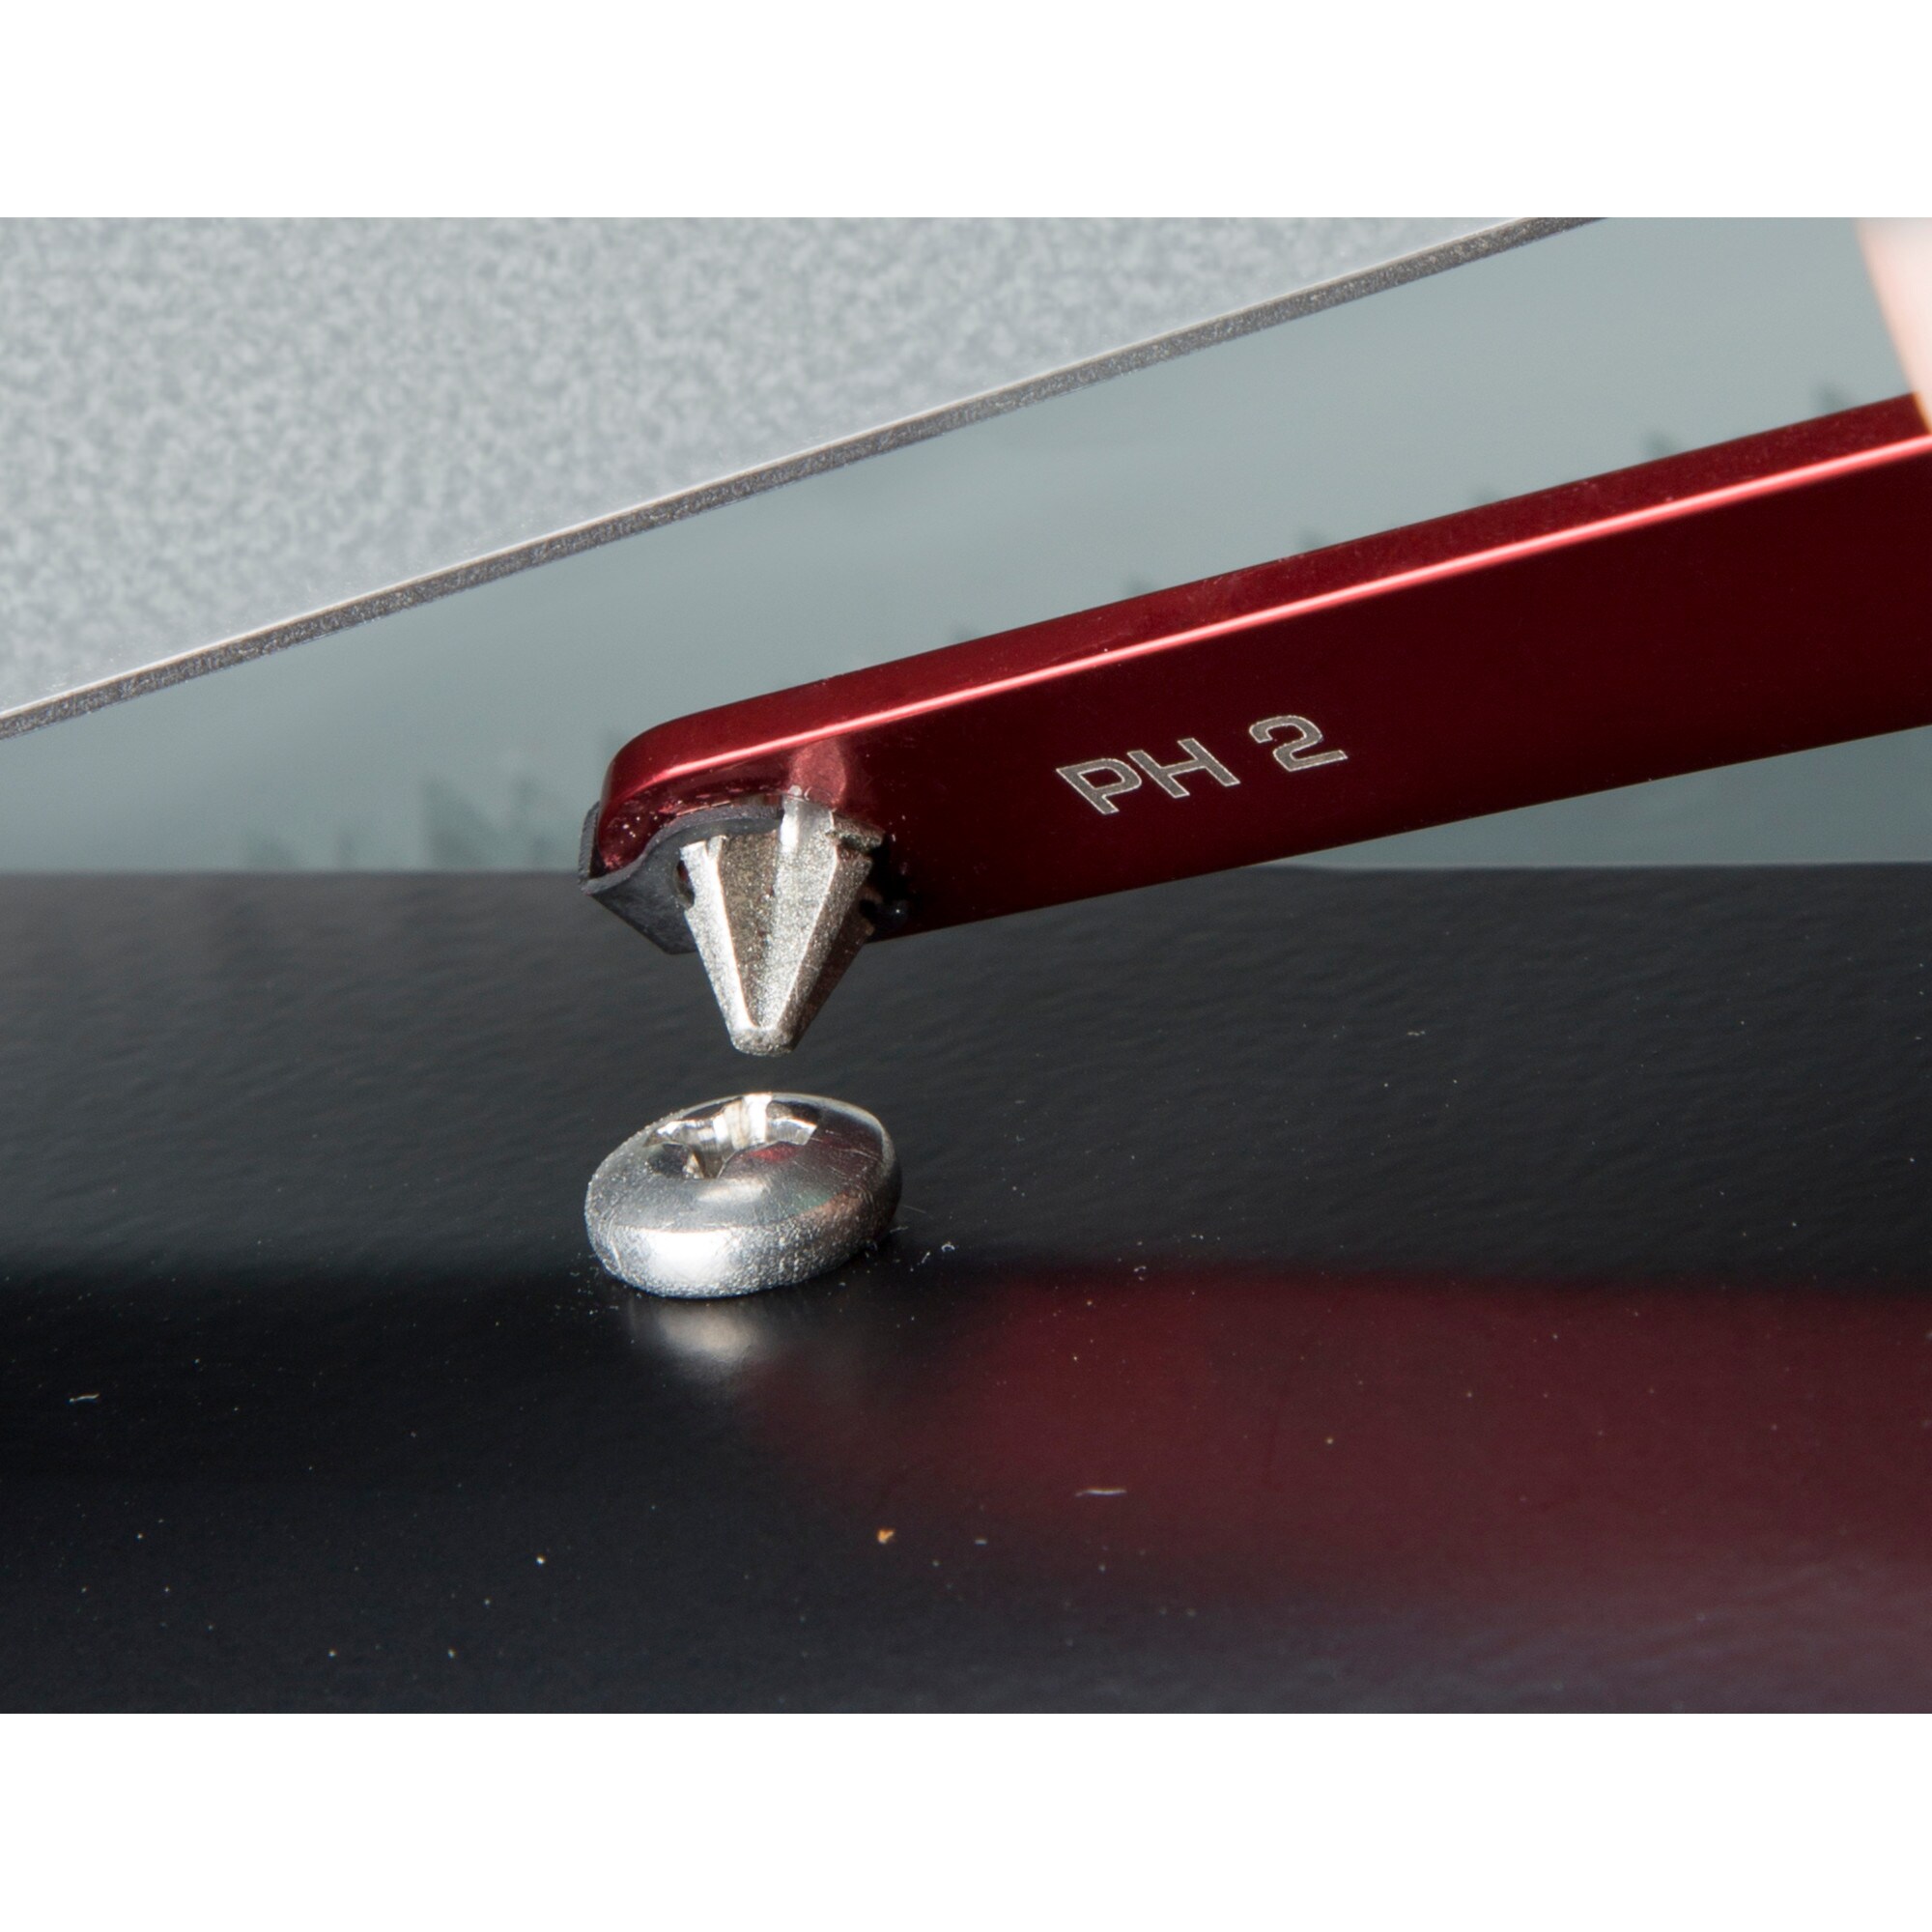 I-MART Offset Right Angle Phillips Flat Head Screwdriver Set (Silver) - 3  Pcs : : Home Improvement